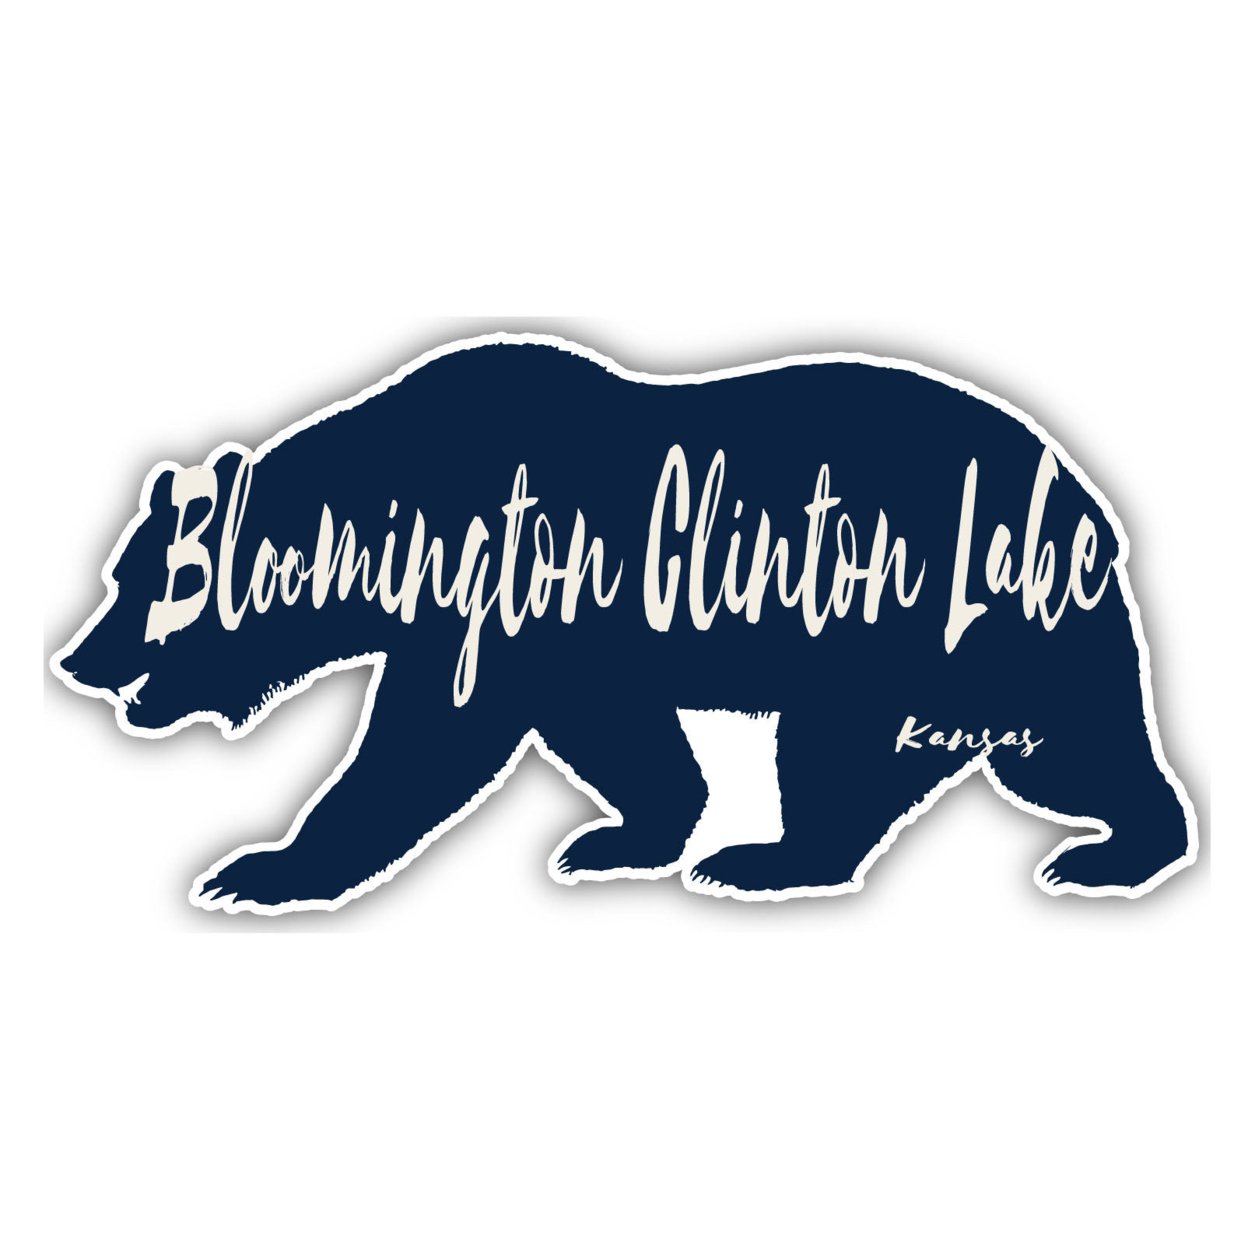 Bloomington Clinton Lake Kansas Souvenir Decorative Stickers (Choose Theme And Size) - 4-Pack, 8-Inch, Bear